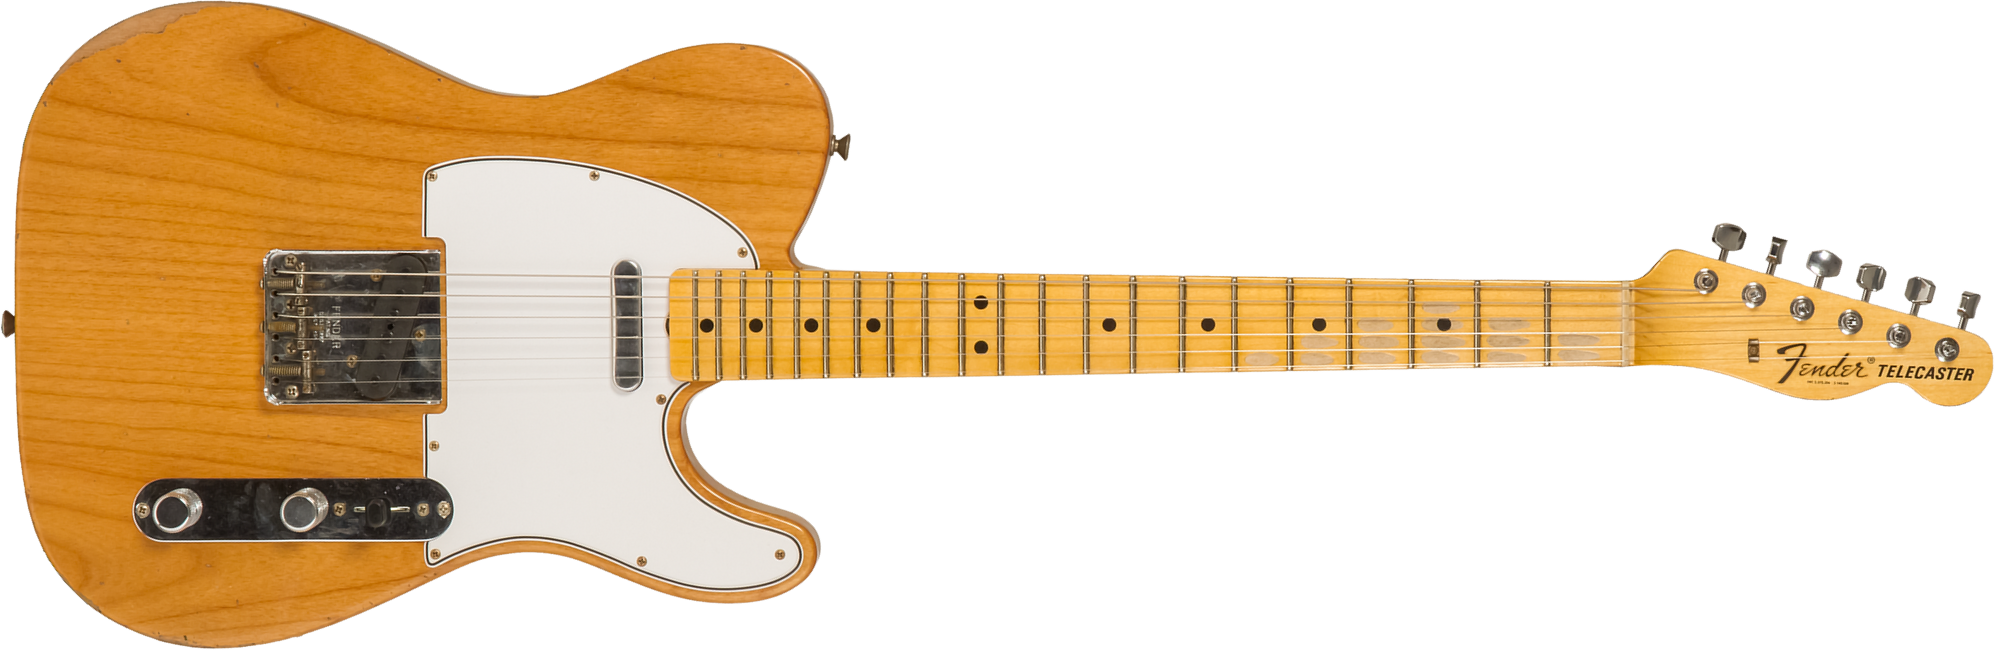 Fender Custom Shop Tele 1968 2s Ht Mn #r123298 - Relic Aged Natural - Televorm elektrische gitaar - Main picture